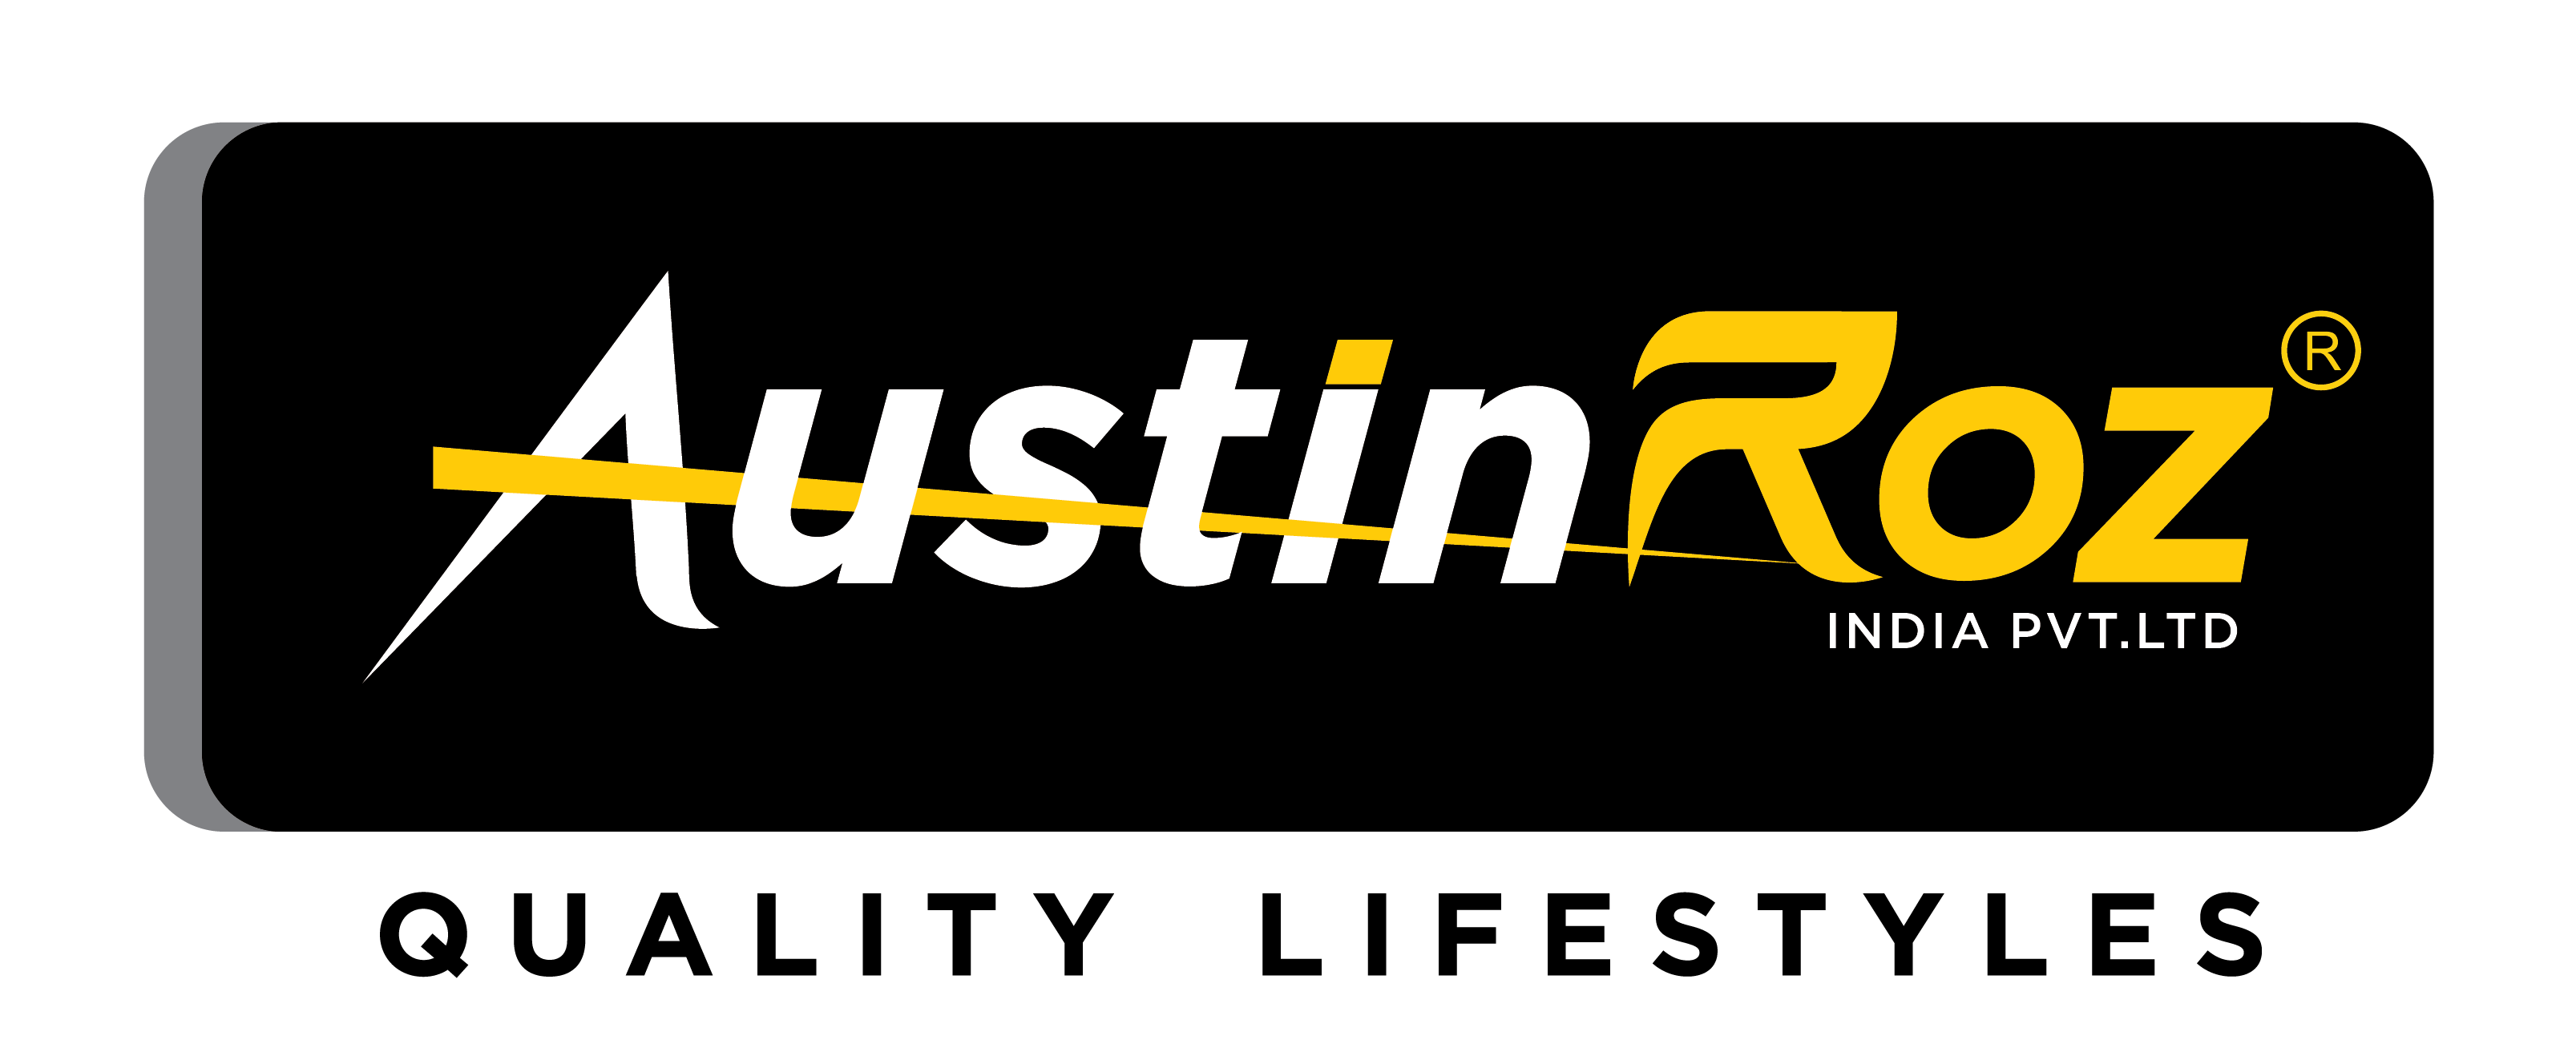 austinroz-logo